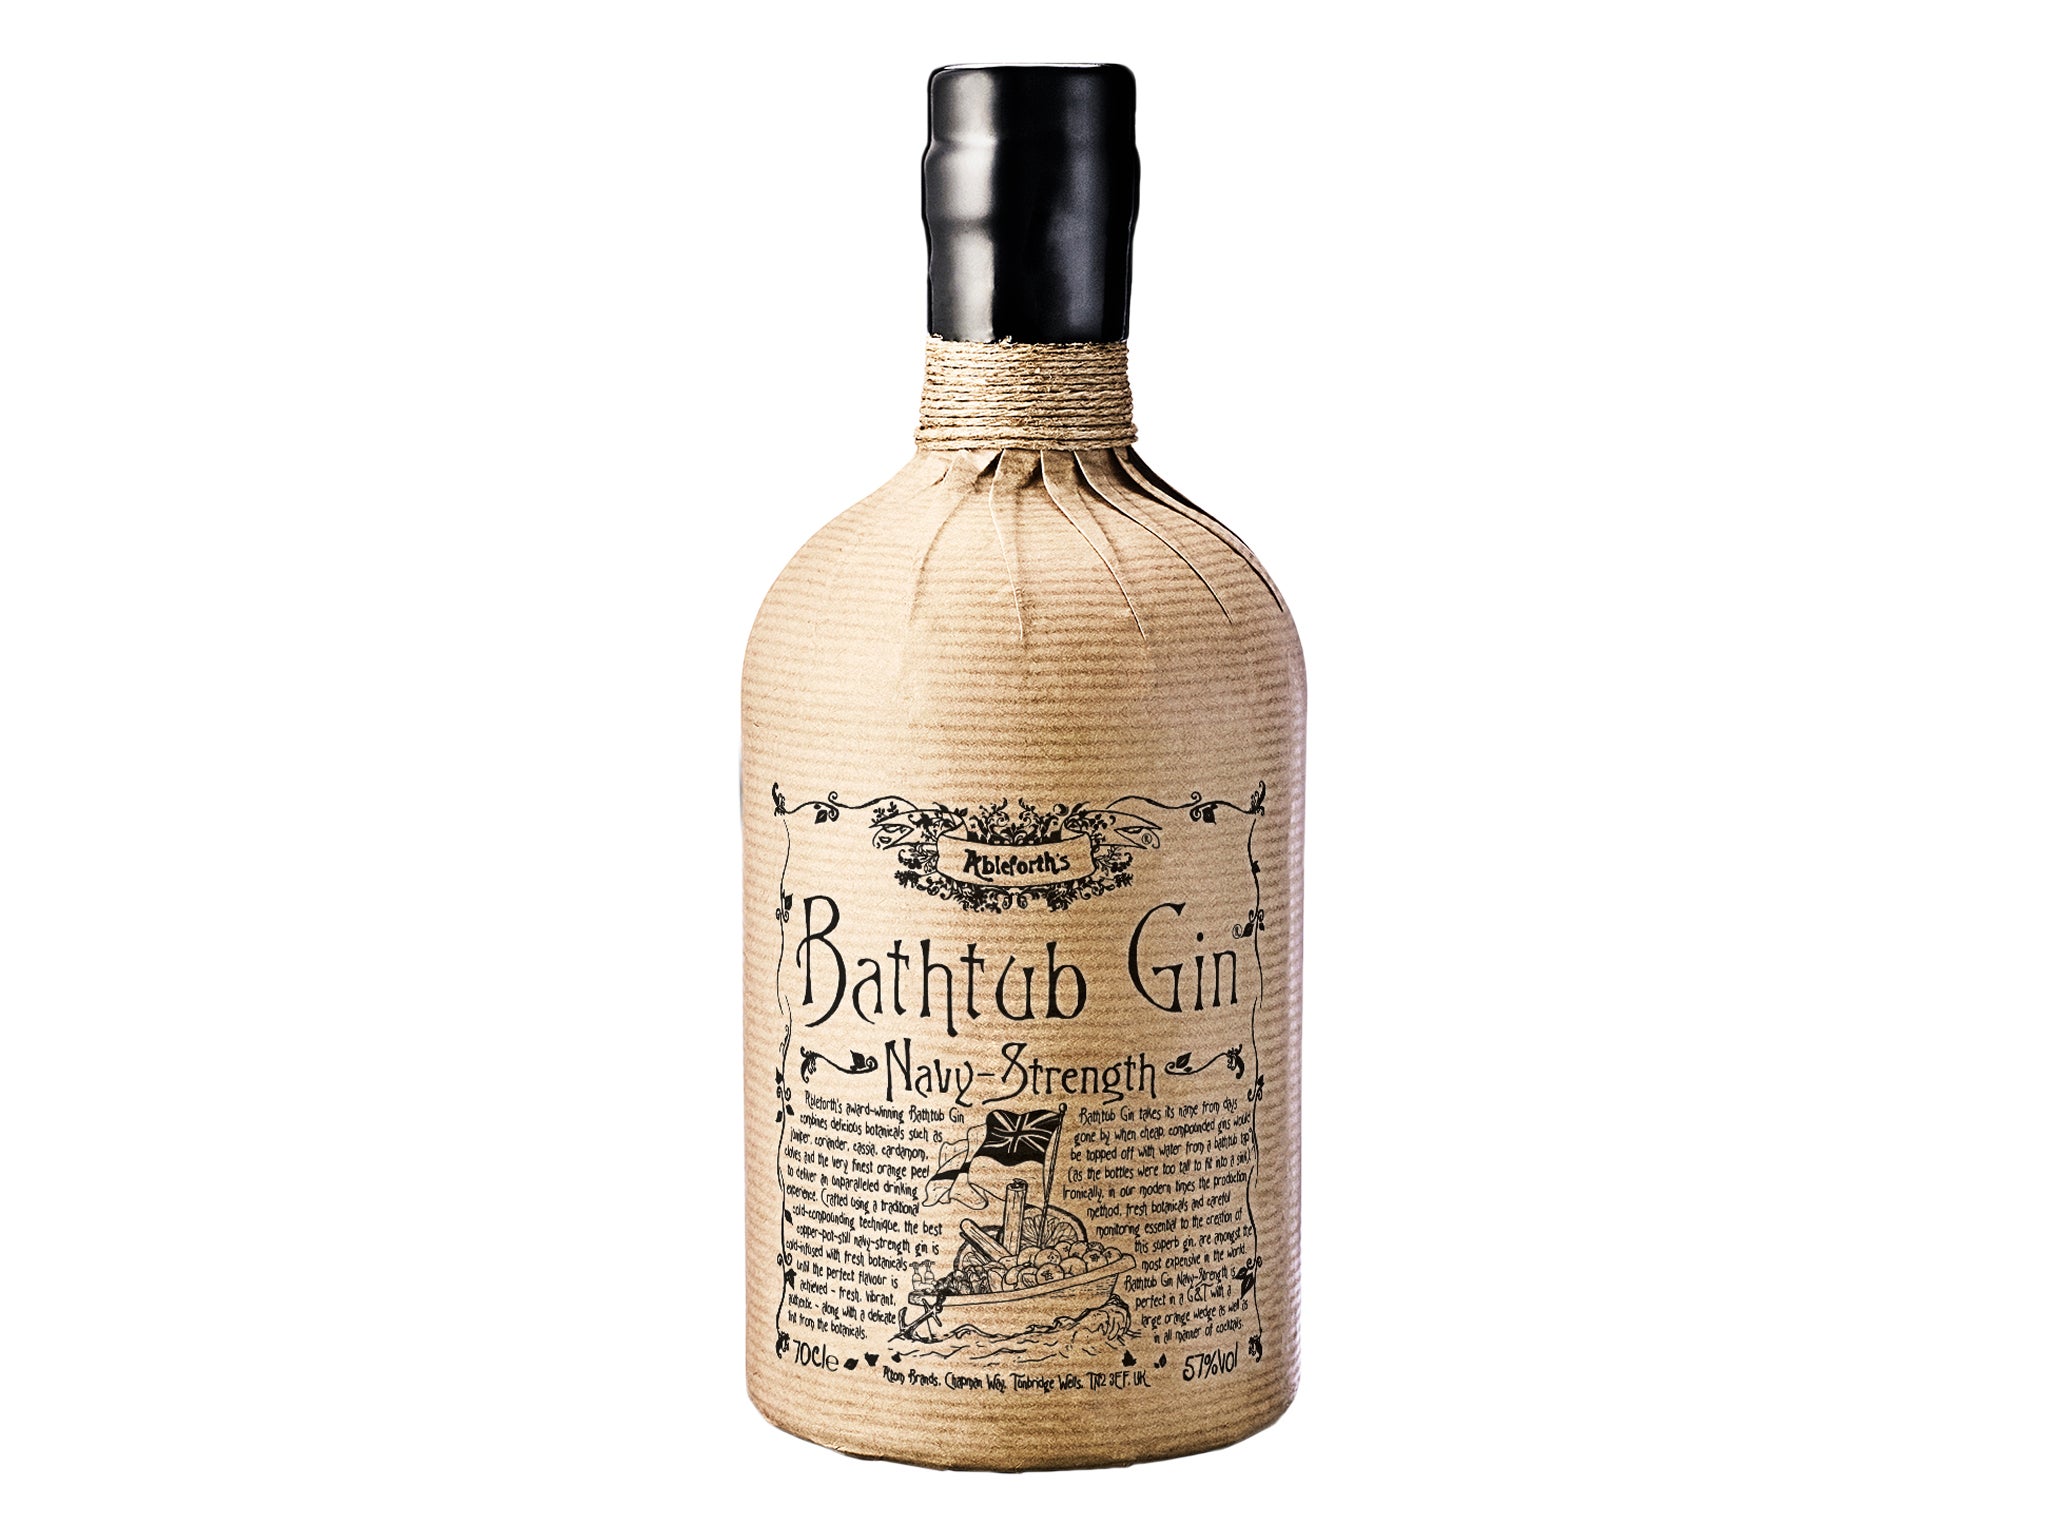 Ableforth Bathtub Navy Strength gin.jpg